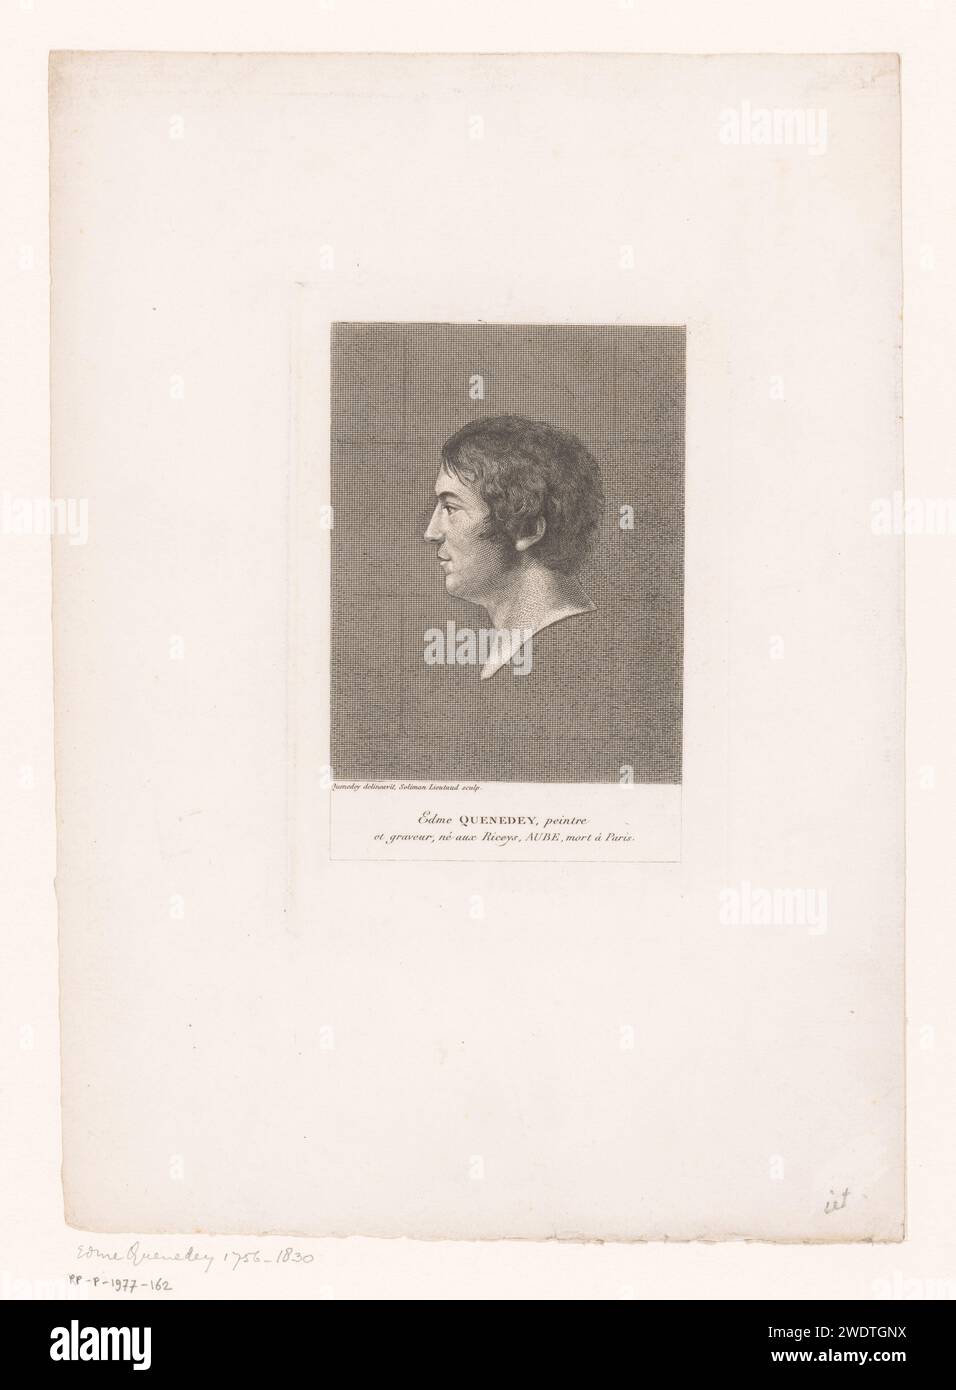 Portret van Edme Quenedey, Soliman Lieutaud, After Edme Quenedey, 1825 - 1874 print   paper engraving / etching historical persons. portrait, self-portrait of artist Stock Photo